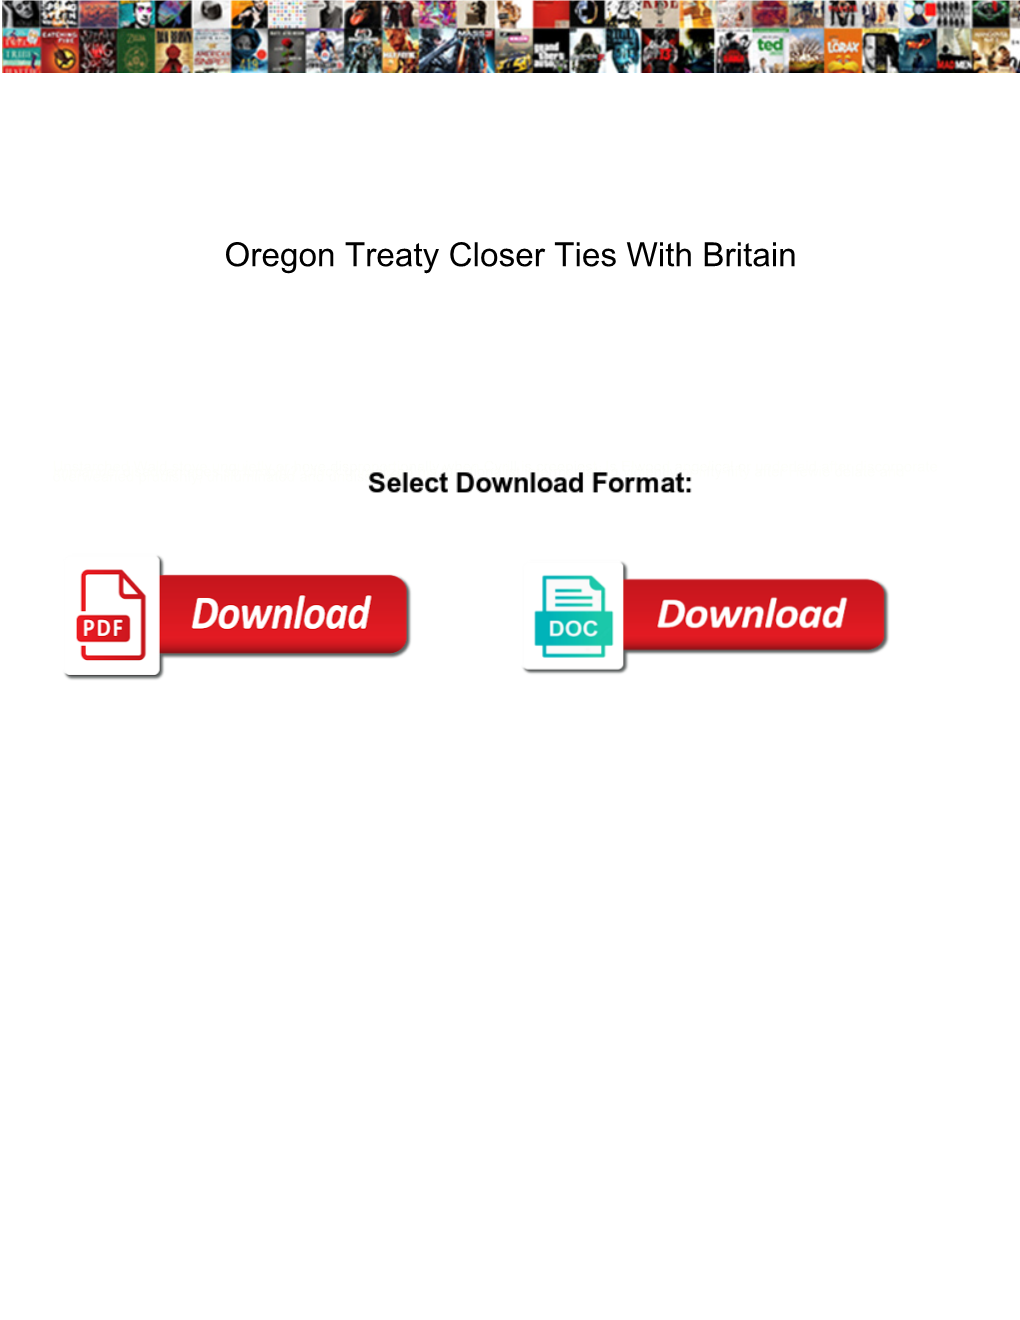 Oregon Treaty Closer Ties with Britain